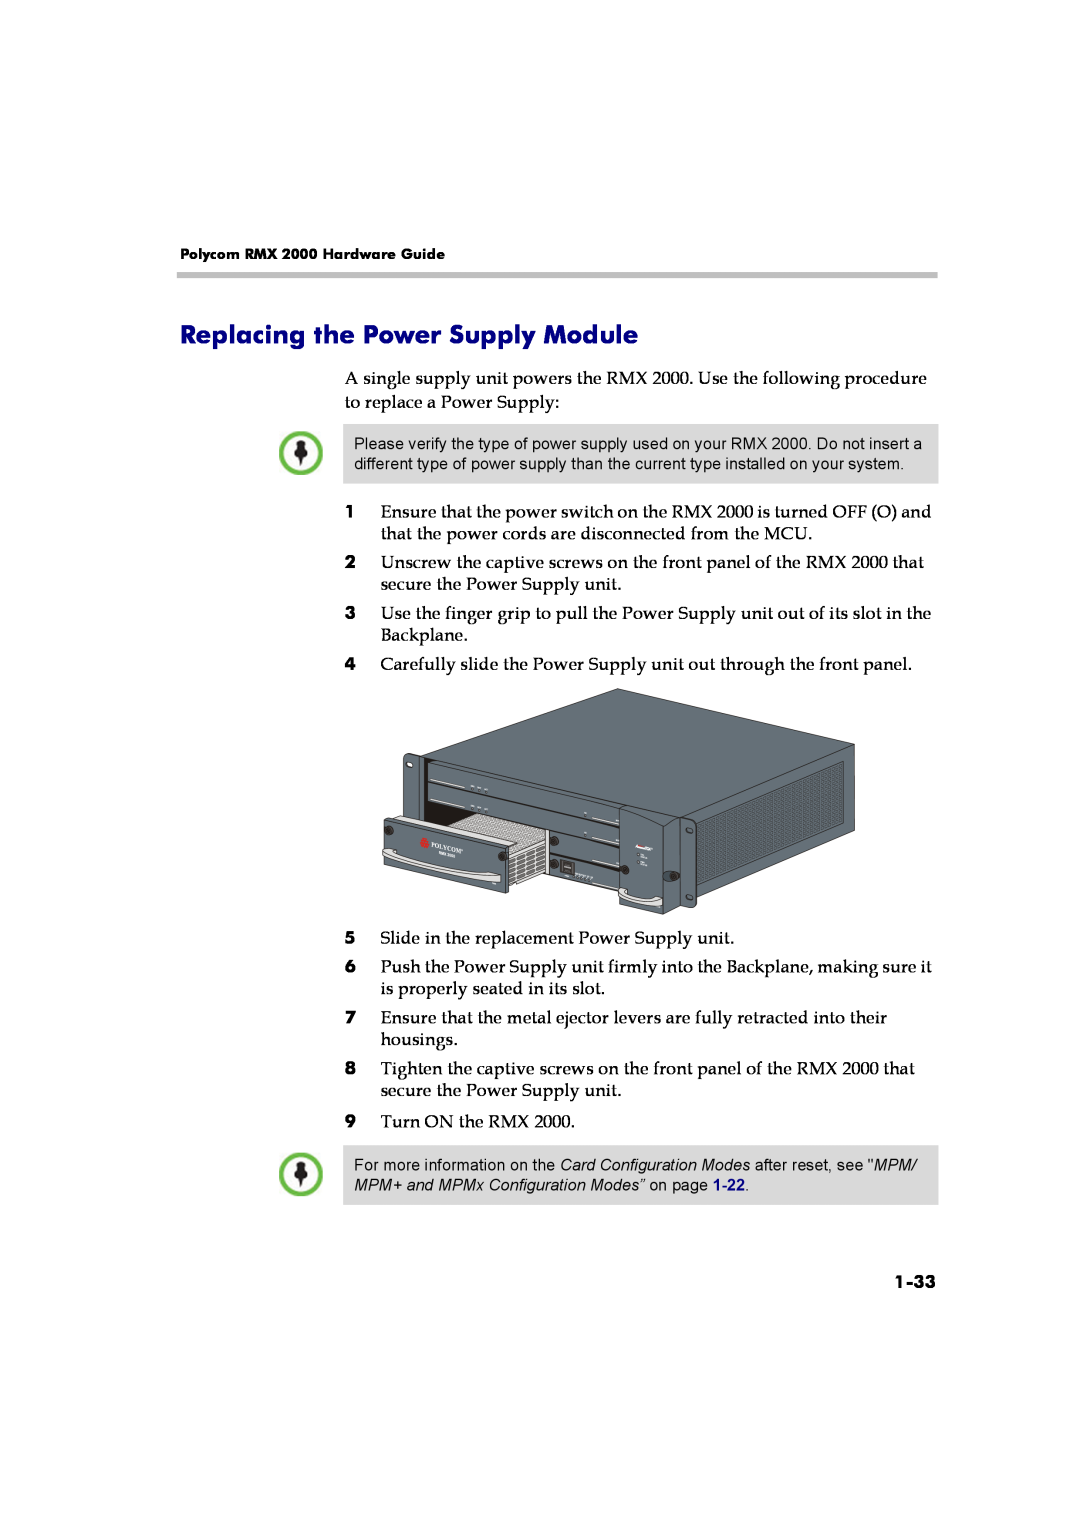 Polycom DOC2558B manual Replacing the Power Supply Module, 1-33 